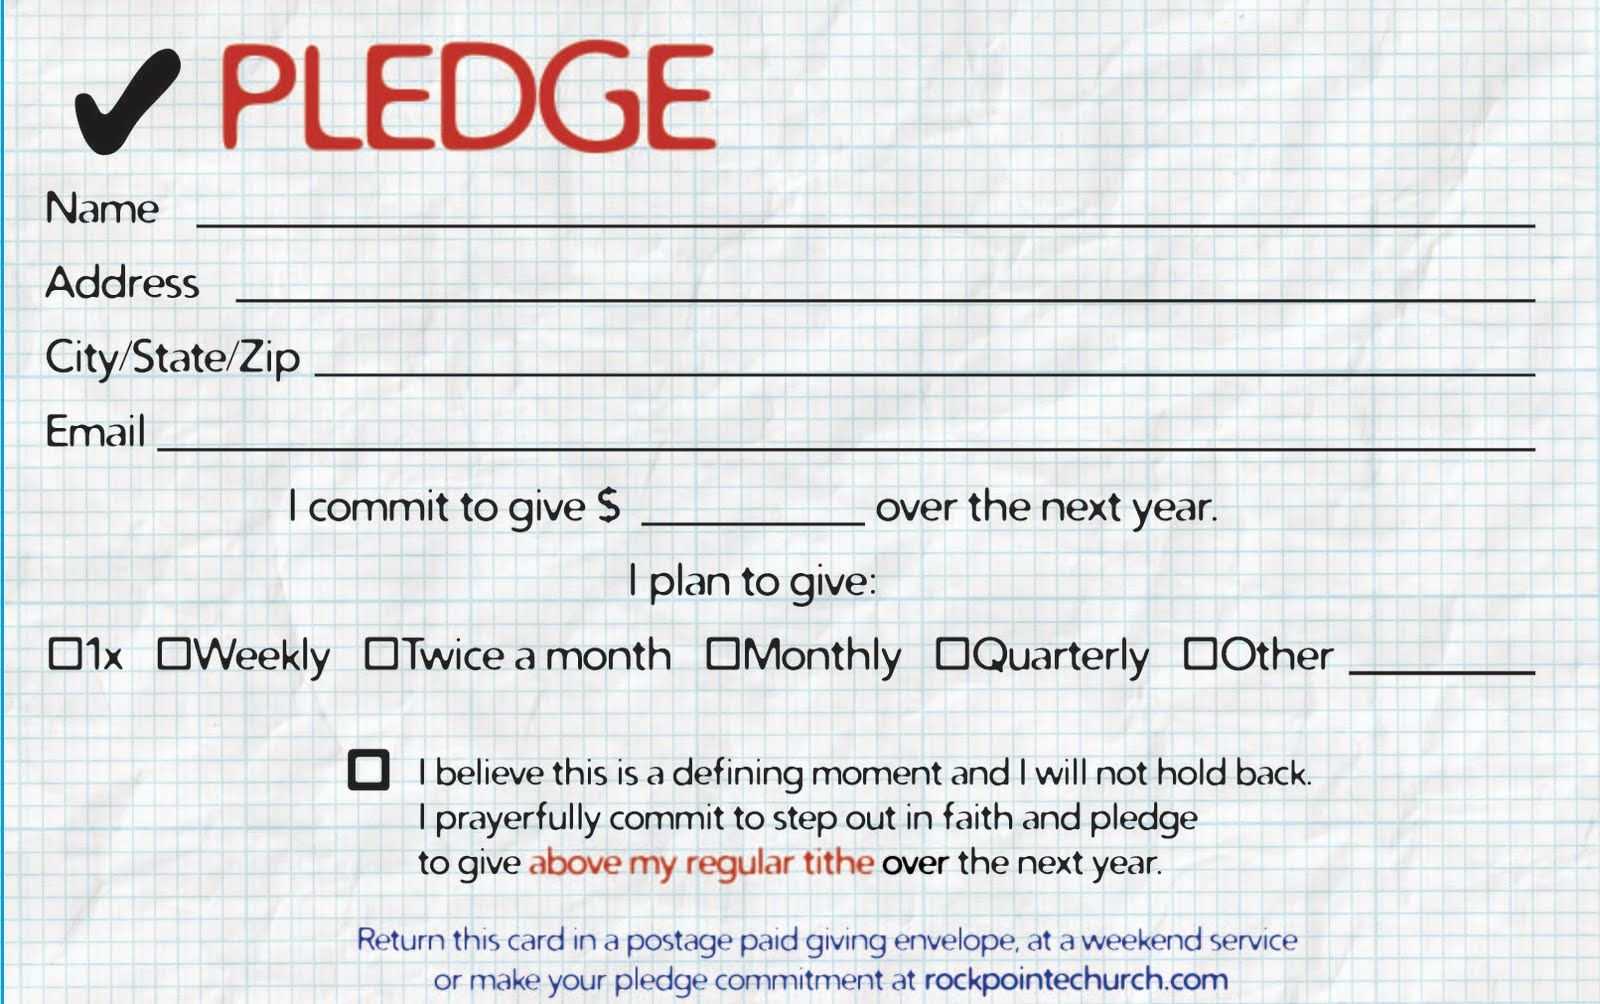 Pledge Cards For Churches | Pledge Card Templates | Card Intended For Free Pledge Card Template